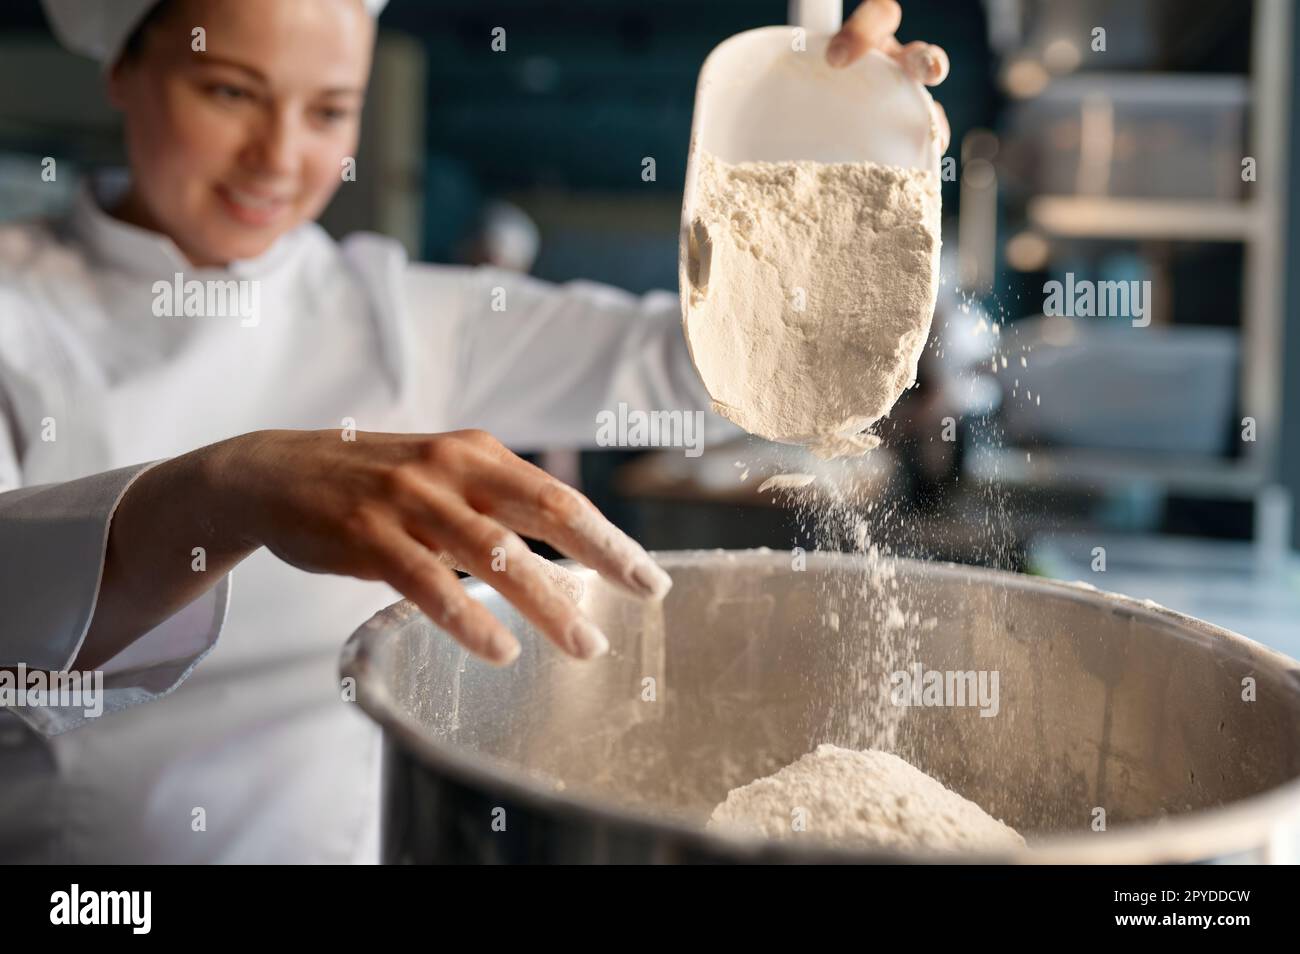 Female confectioner wearing white uniform putting flour into big metal bowl Stock Photo